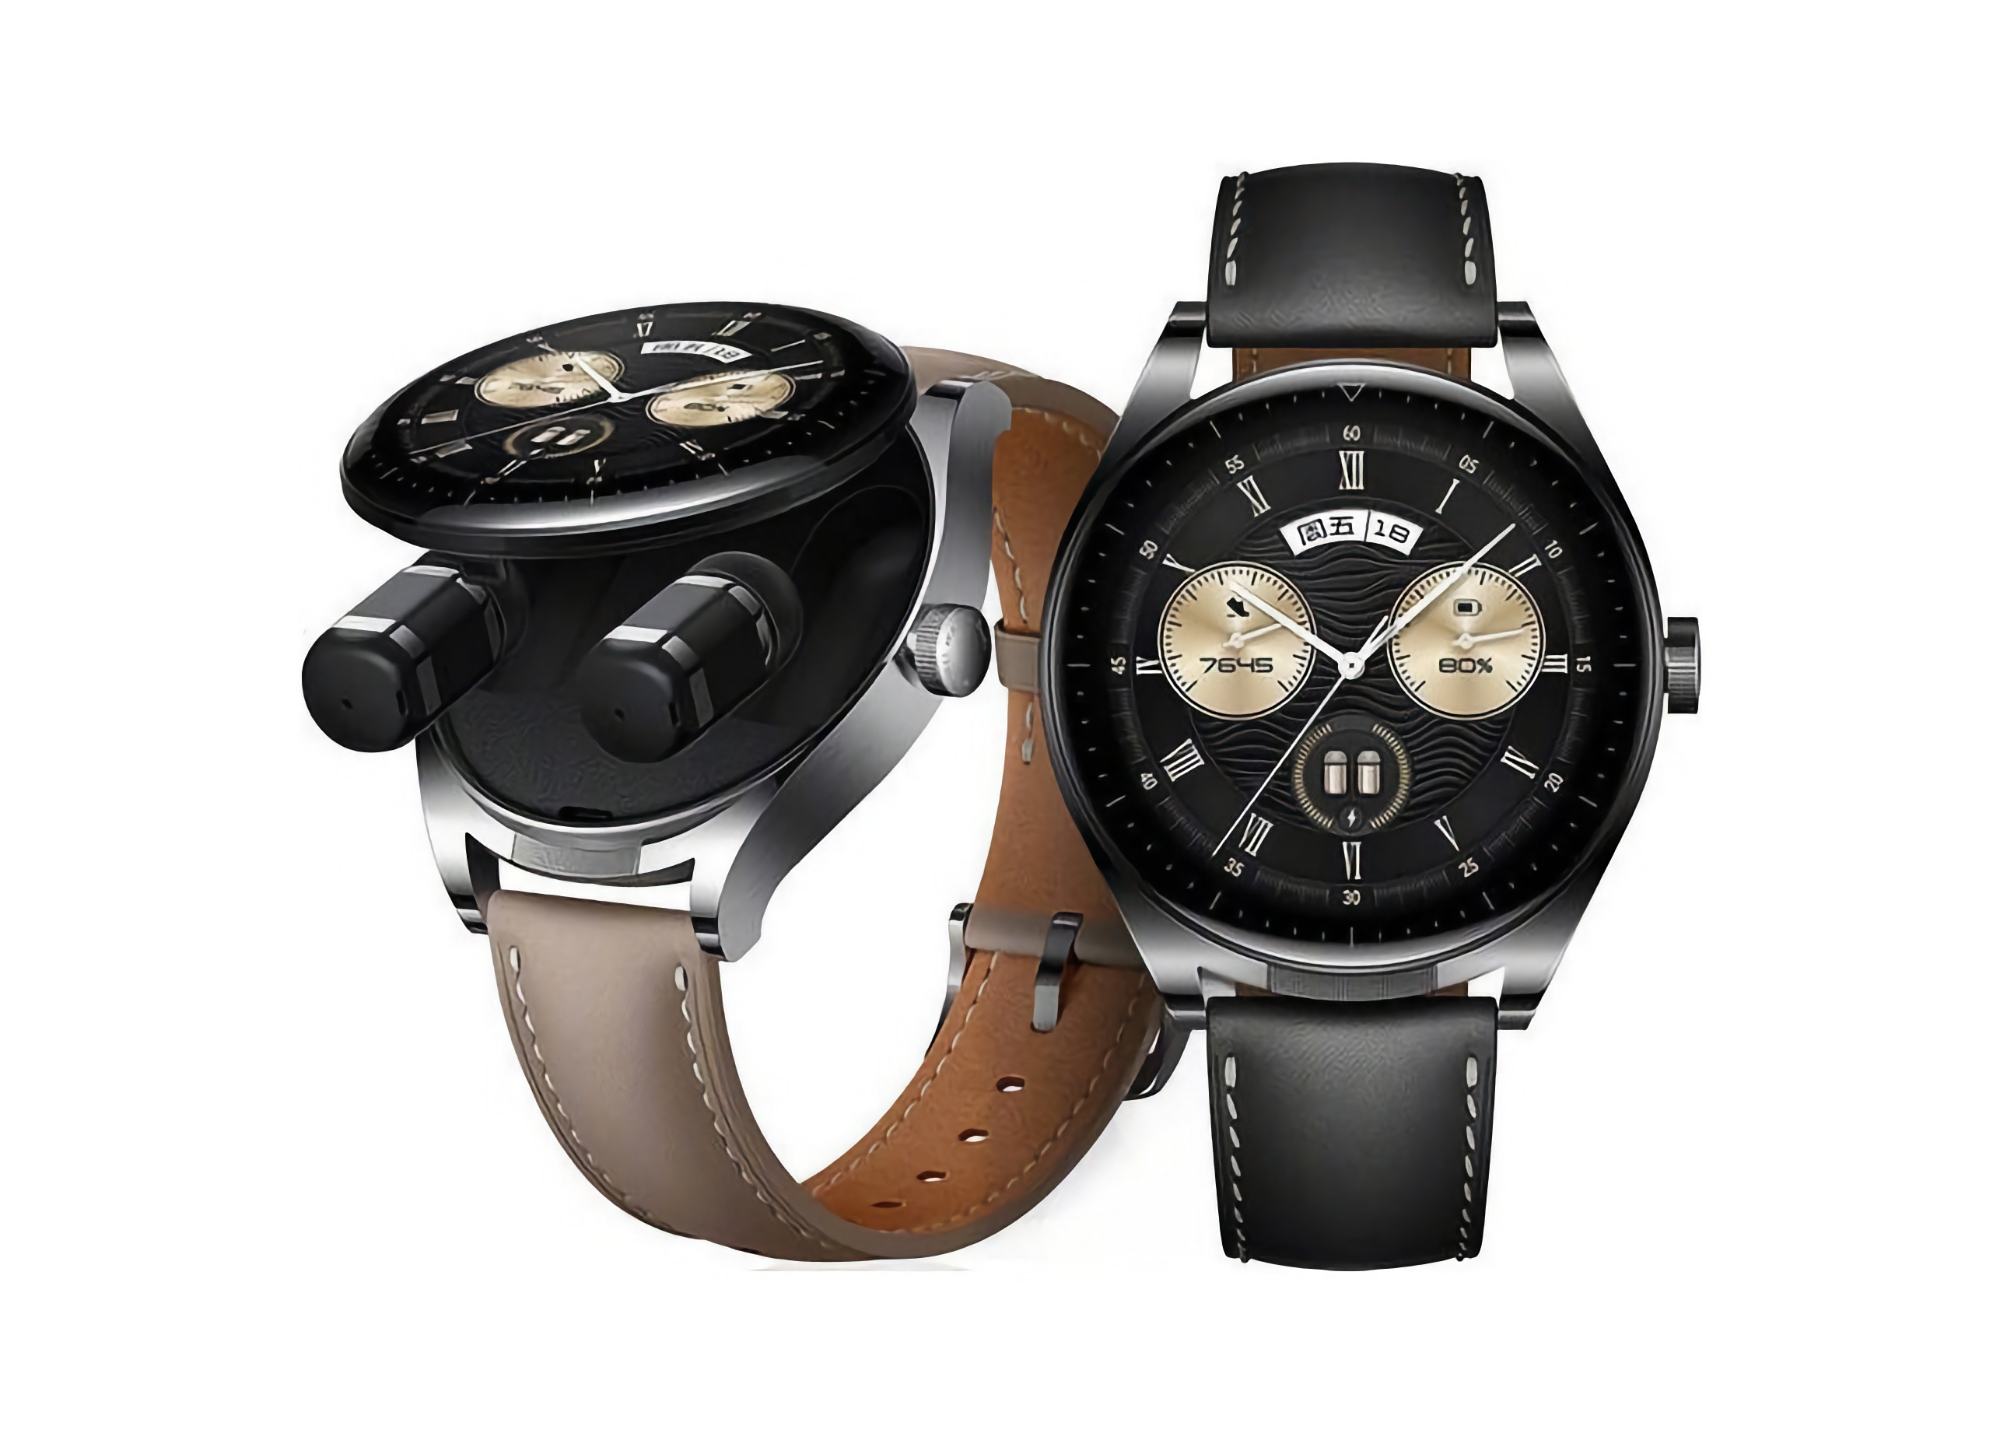 Huawei Watch Buds на глобальному ринку почав отримувати HarmonyOS 4